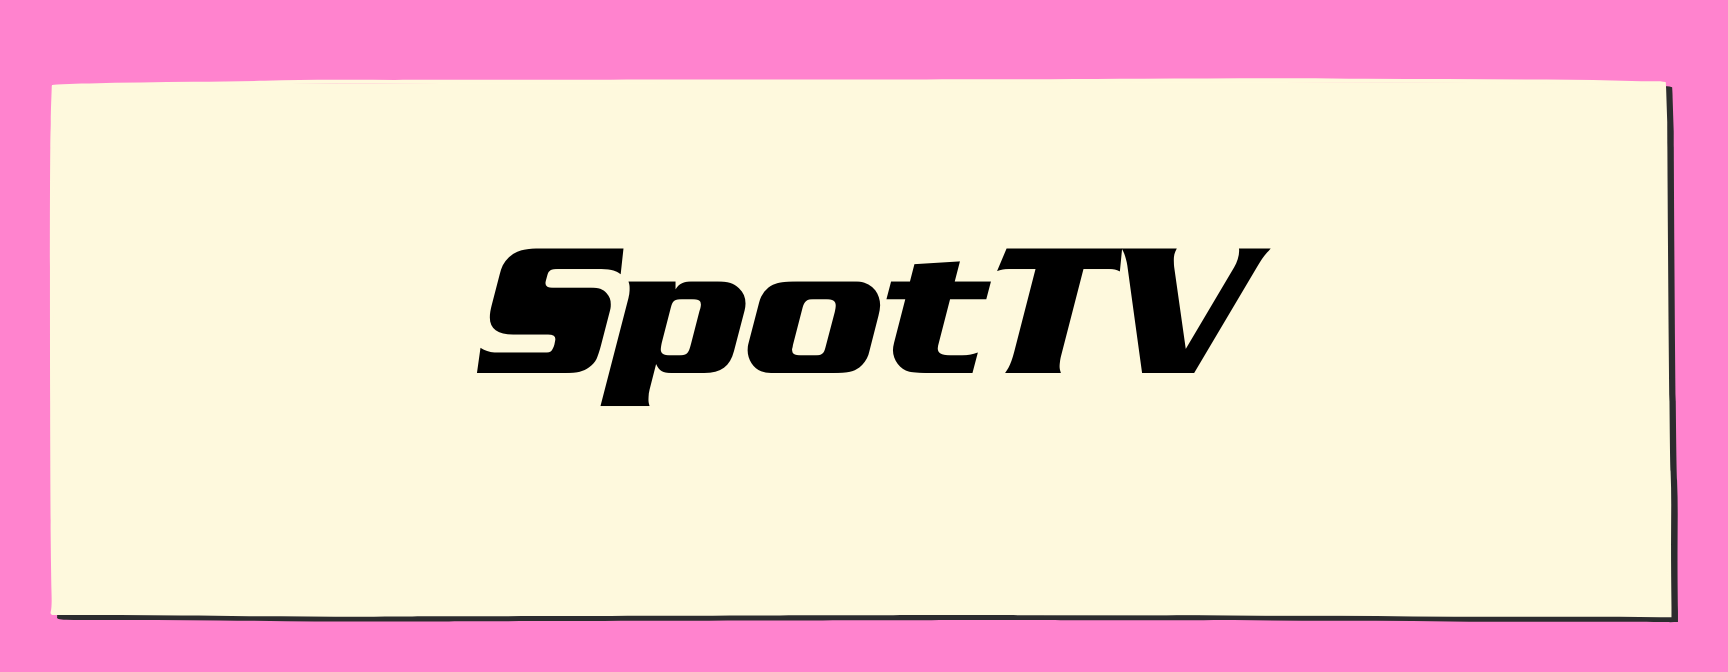 SPOTTV WEBSITE